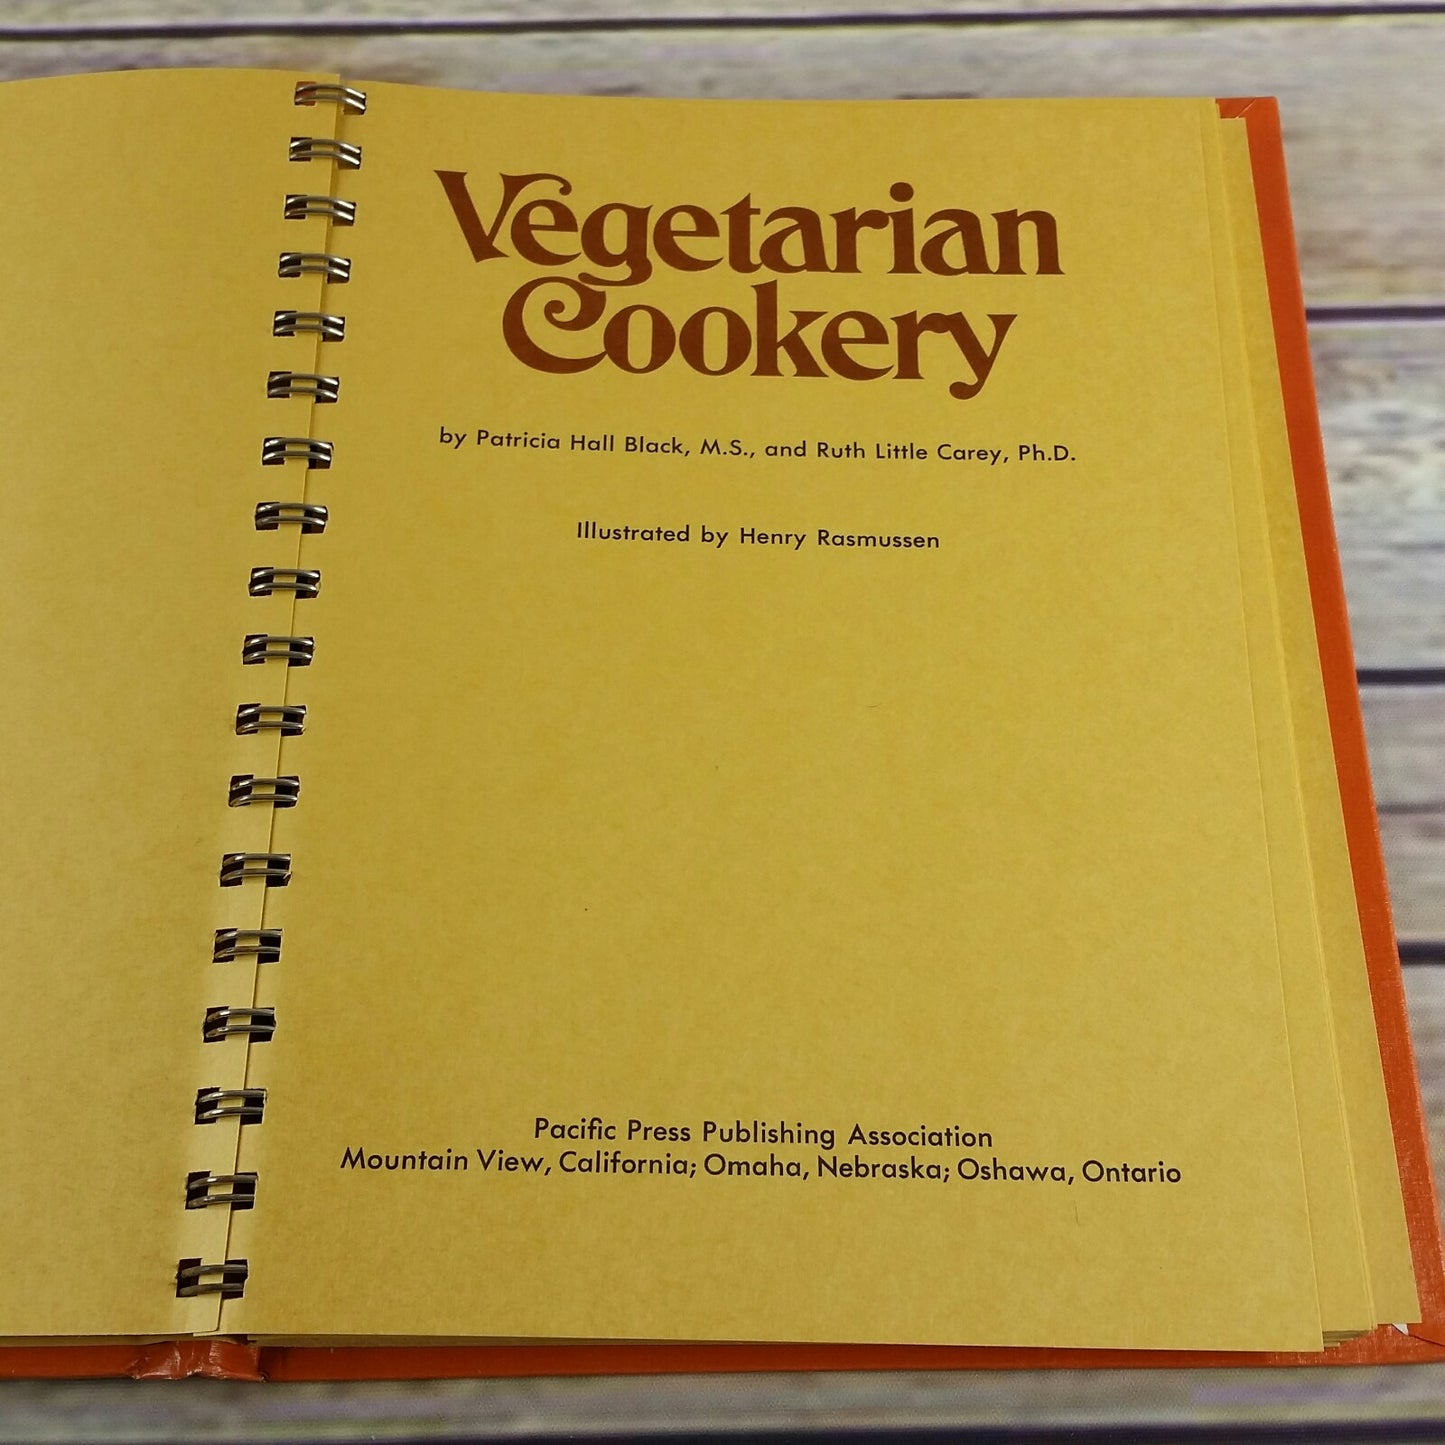 Vintage Cookbook Vegetarian Cookery 1 1971 Appetizers Salads Beverages Recipes Spiral Bound Hardcover - At Grandma's Table